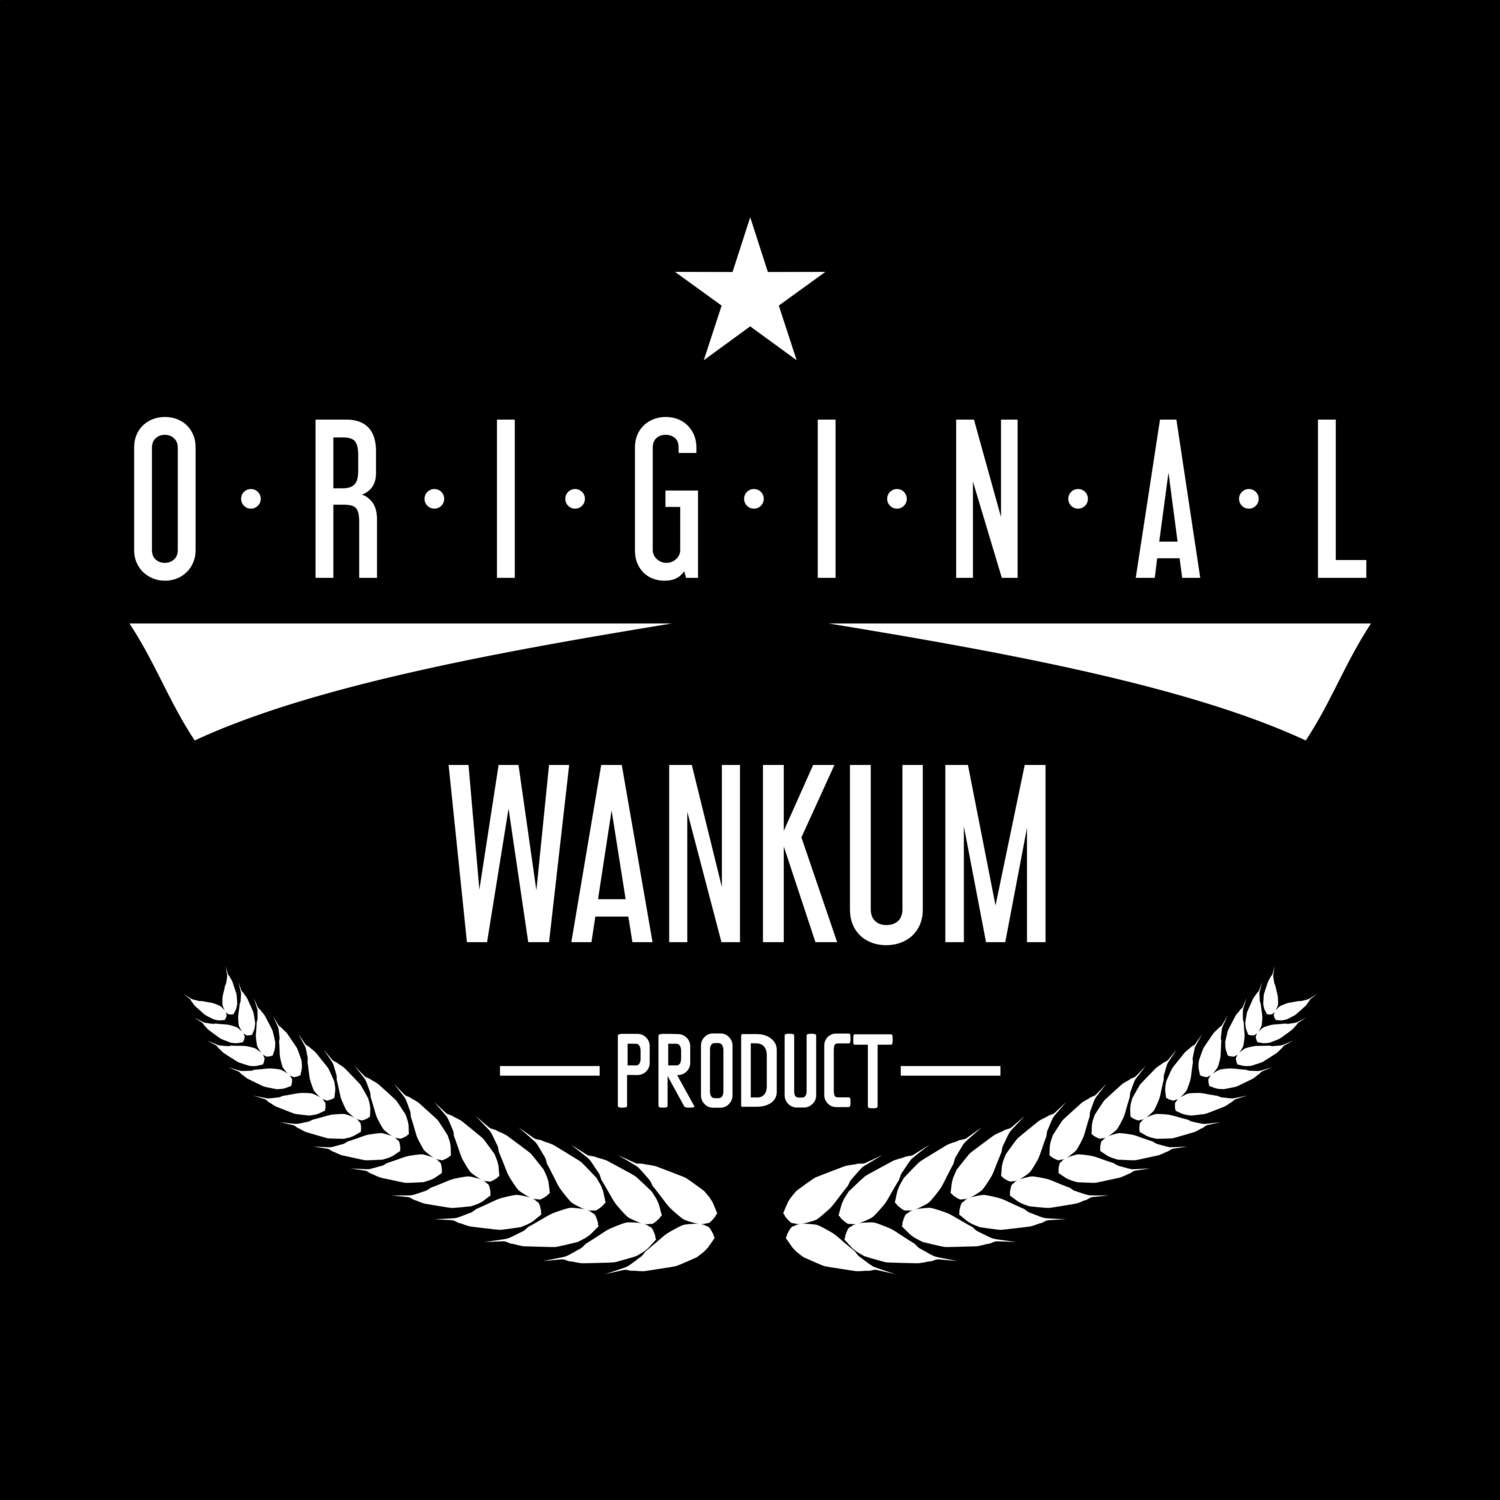 Wankum T-Shirt »Original Product«